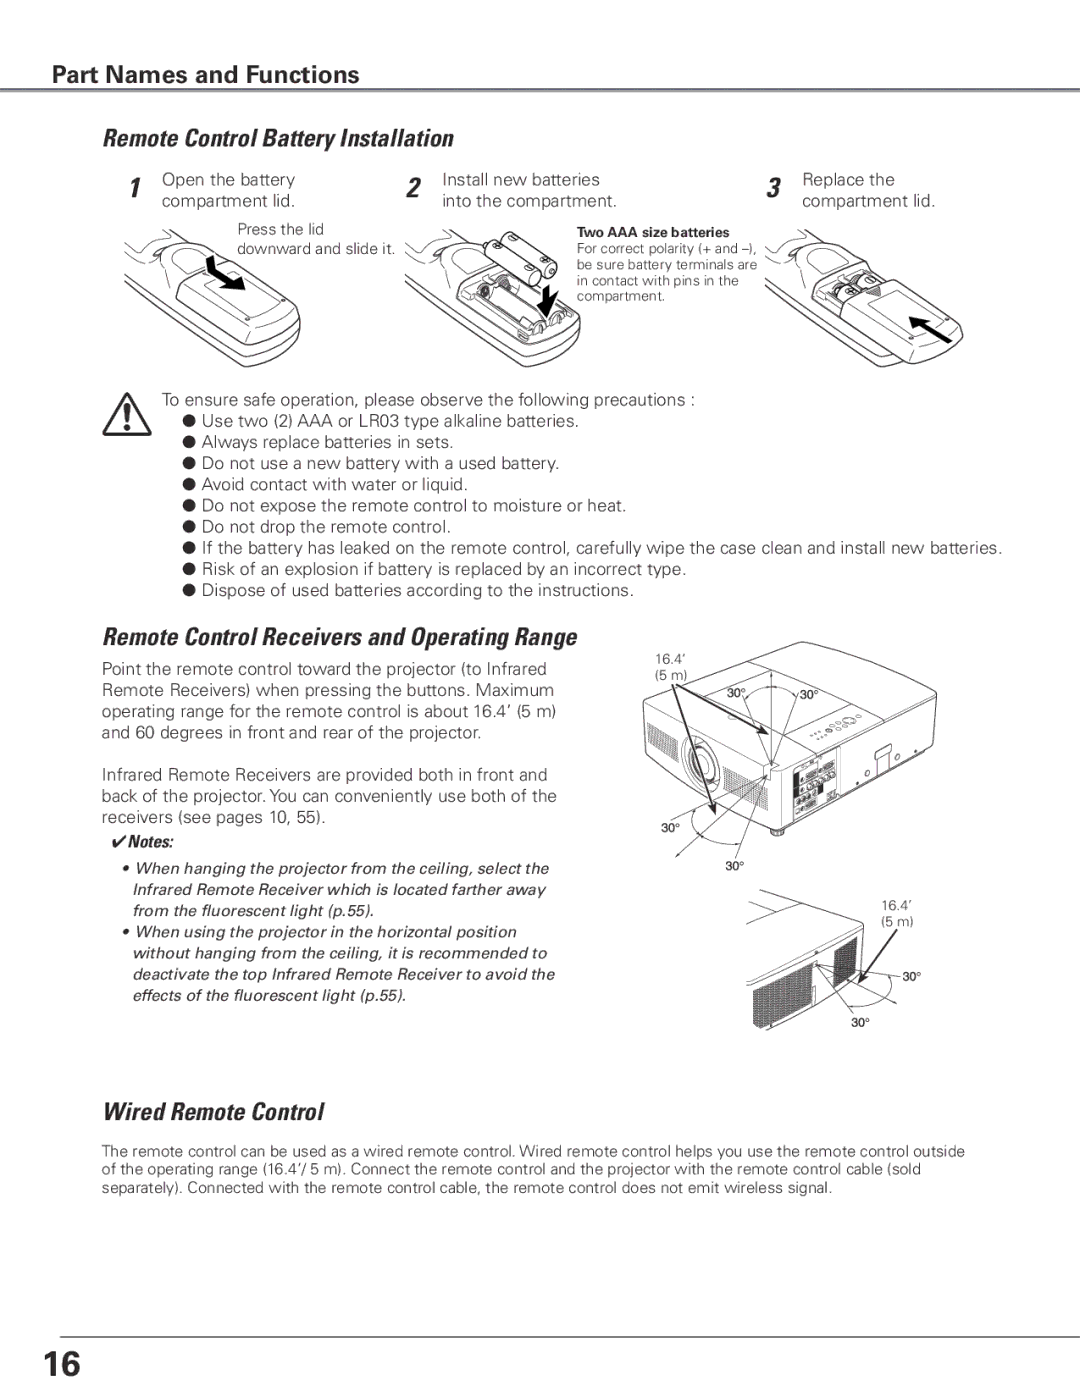 Sanyo WTC500AL owner manual Remote Control Battery Installation, Wired Remote Control 